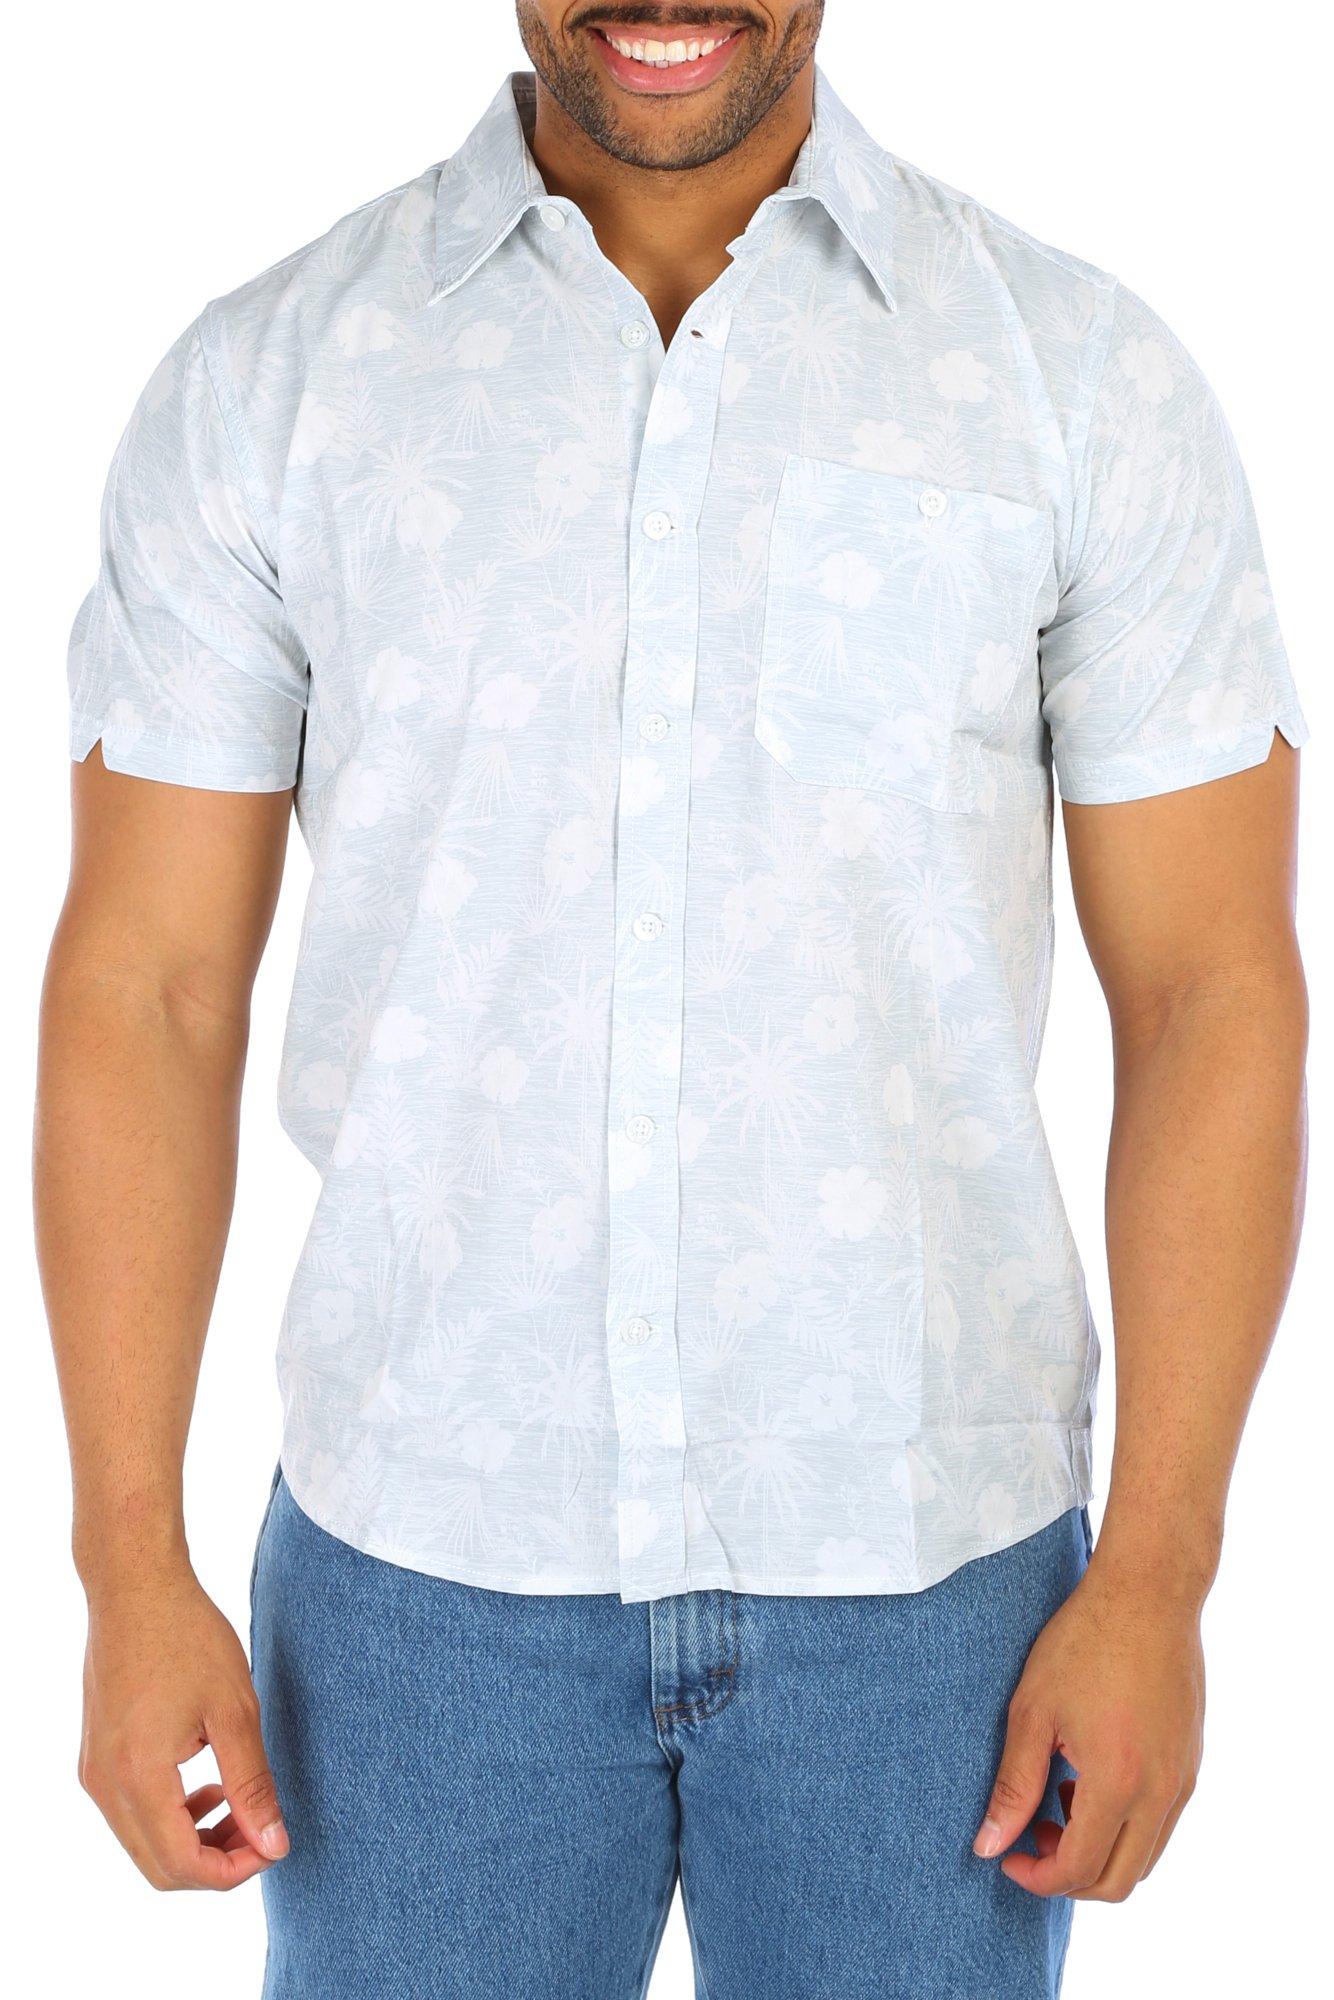 Men's Outdoor Palm Leaf Print Button Down Shirt